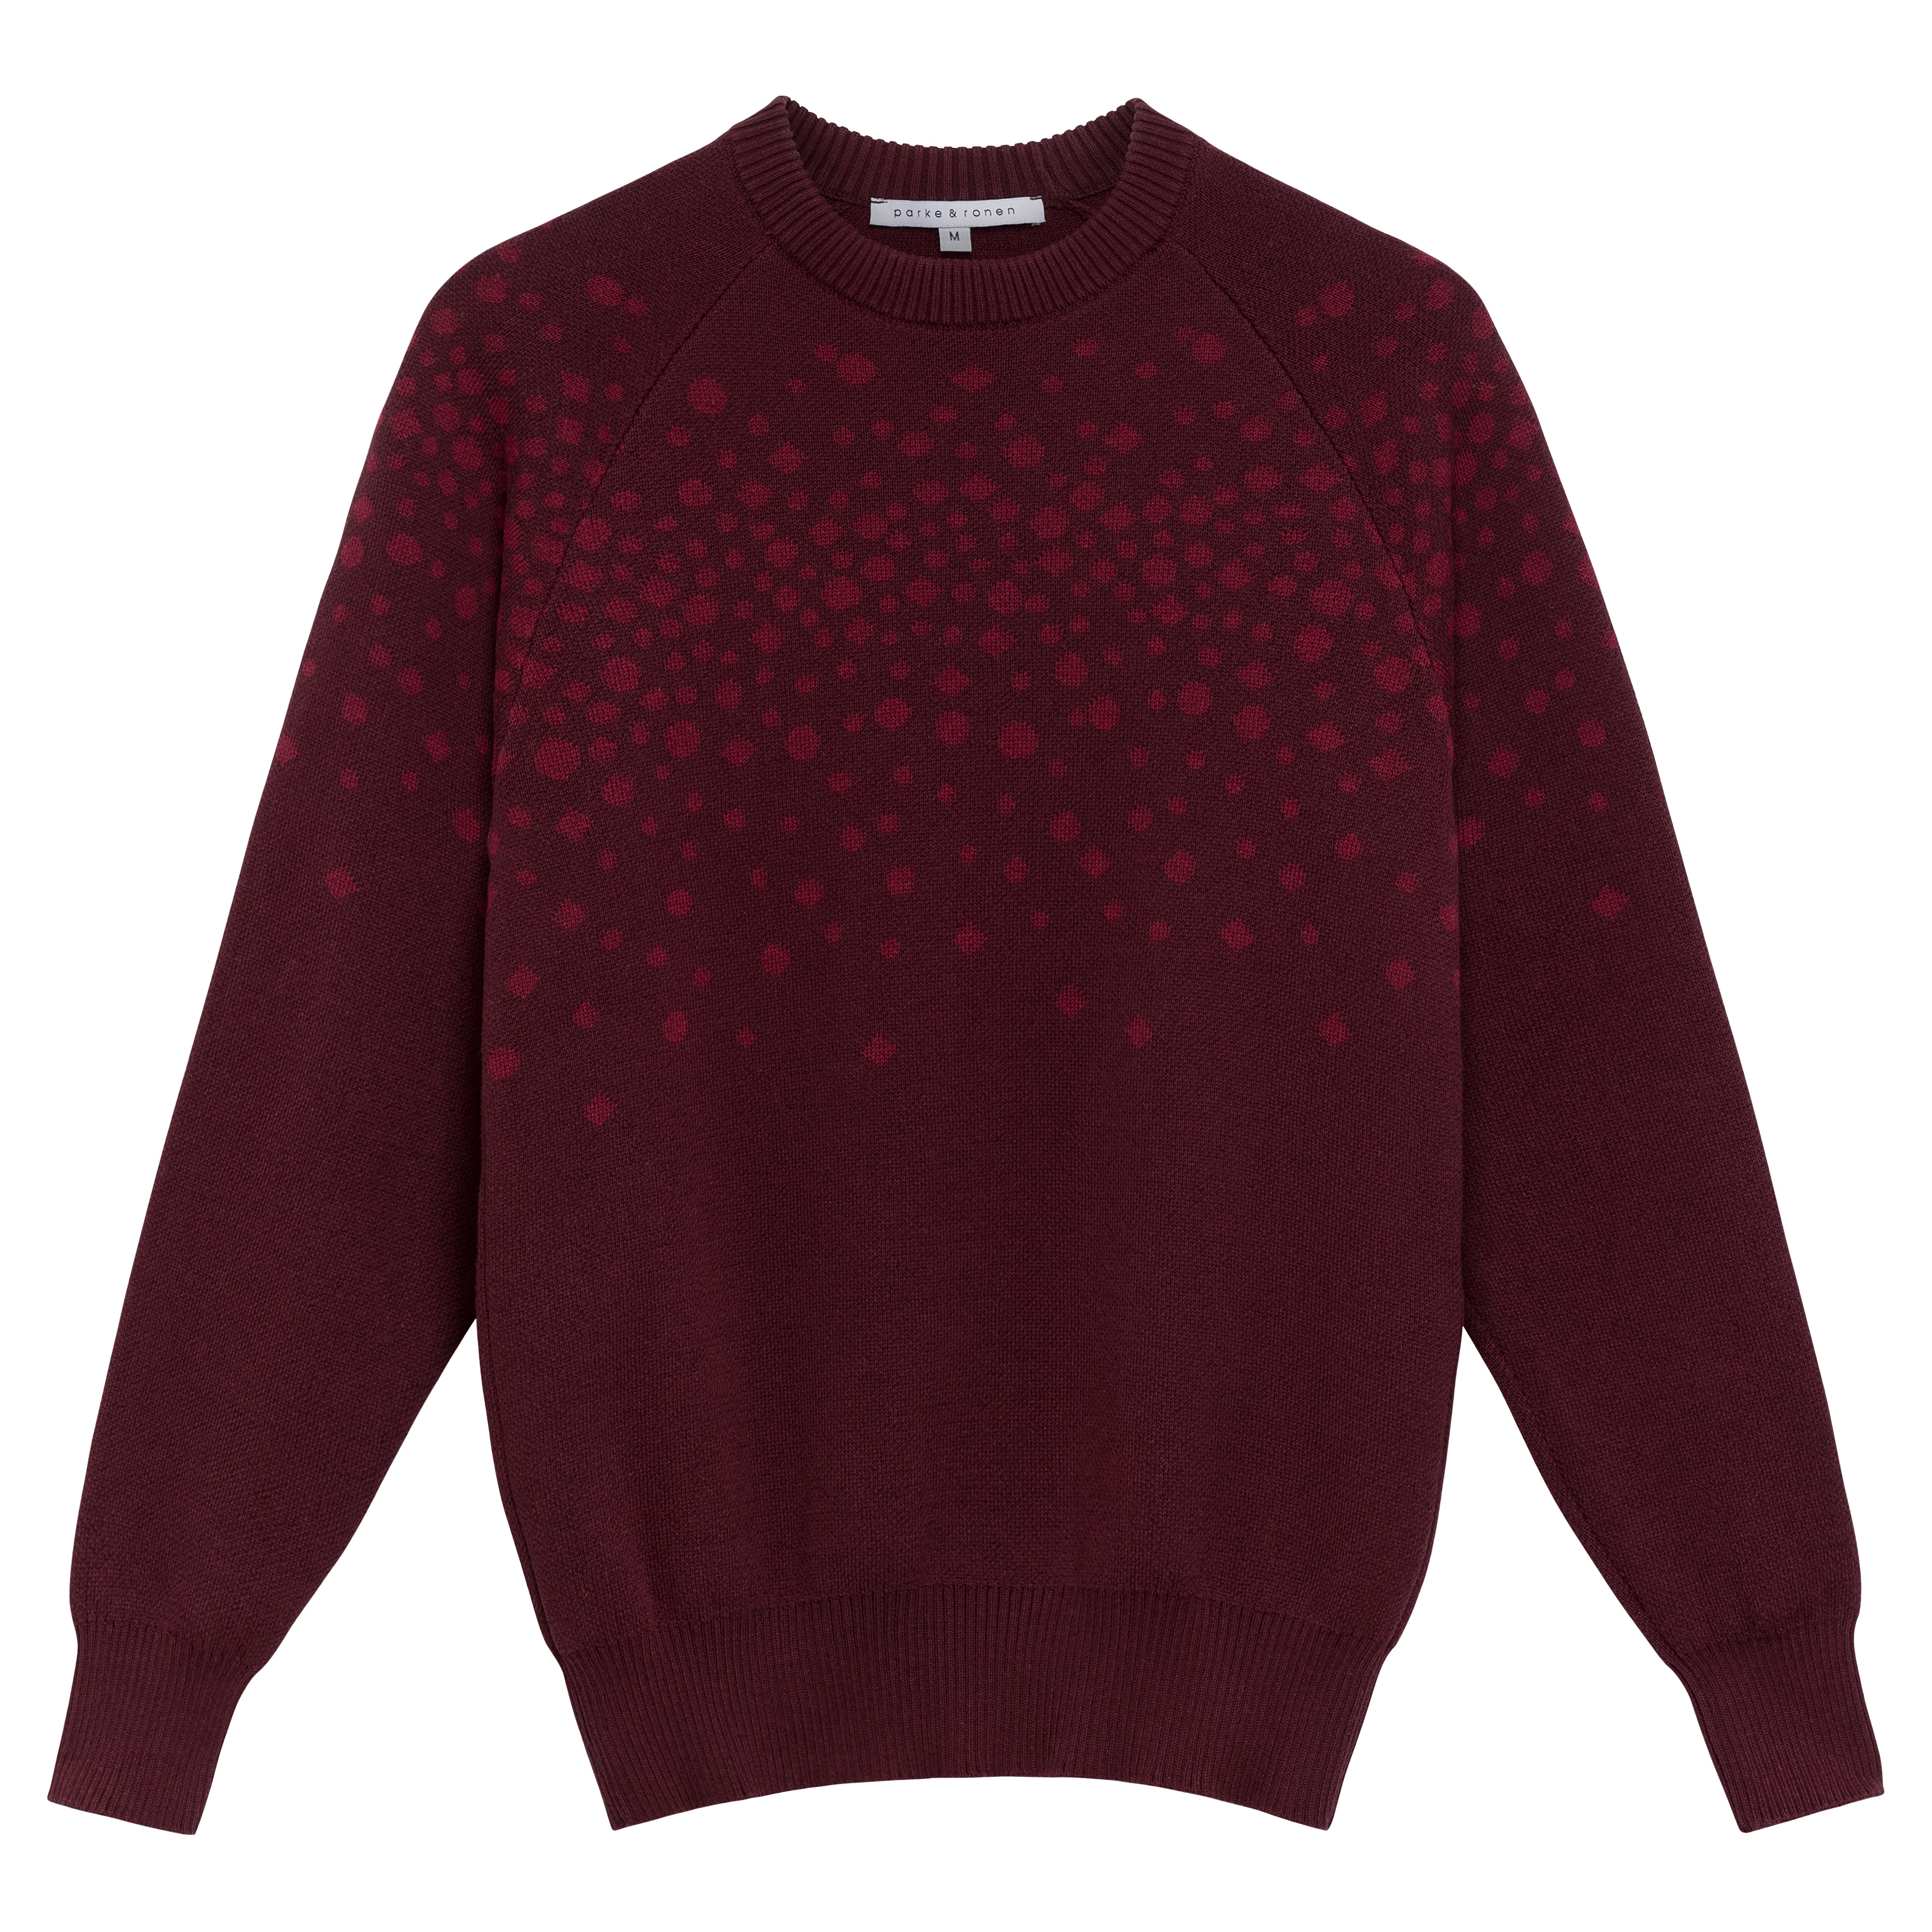 SAVE 70%- Mars Red Starlight Sweater